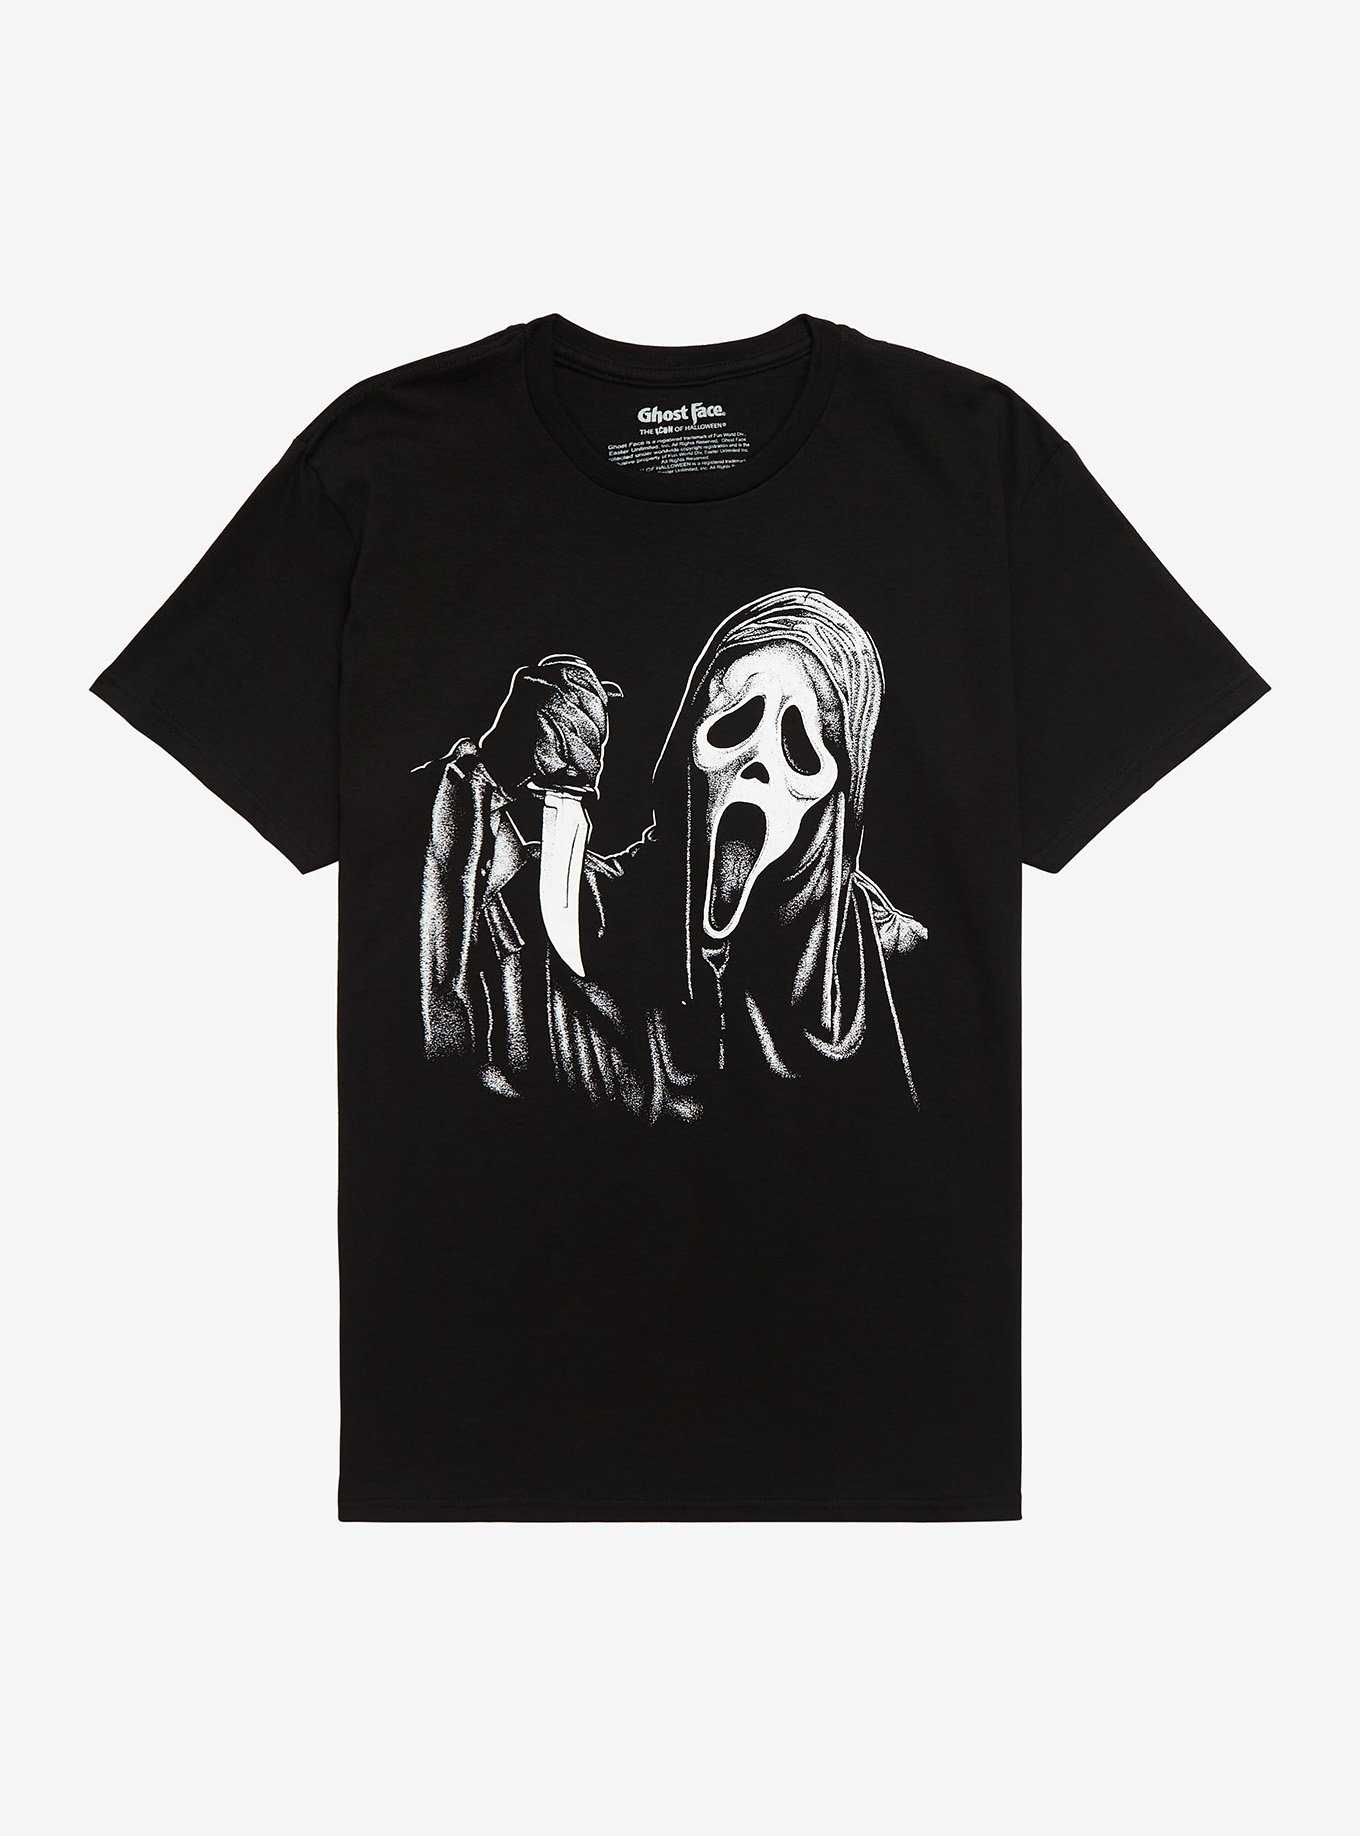 Scream Ghost Face Lives T-Shirt, , hi-res